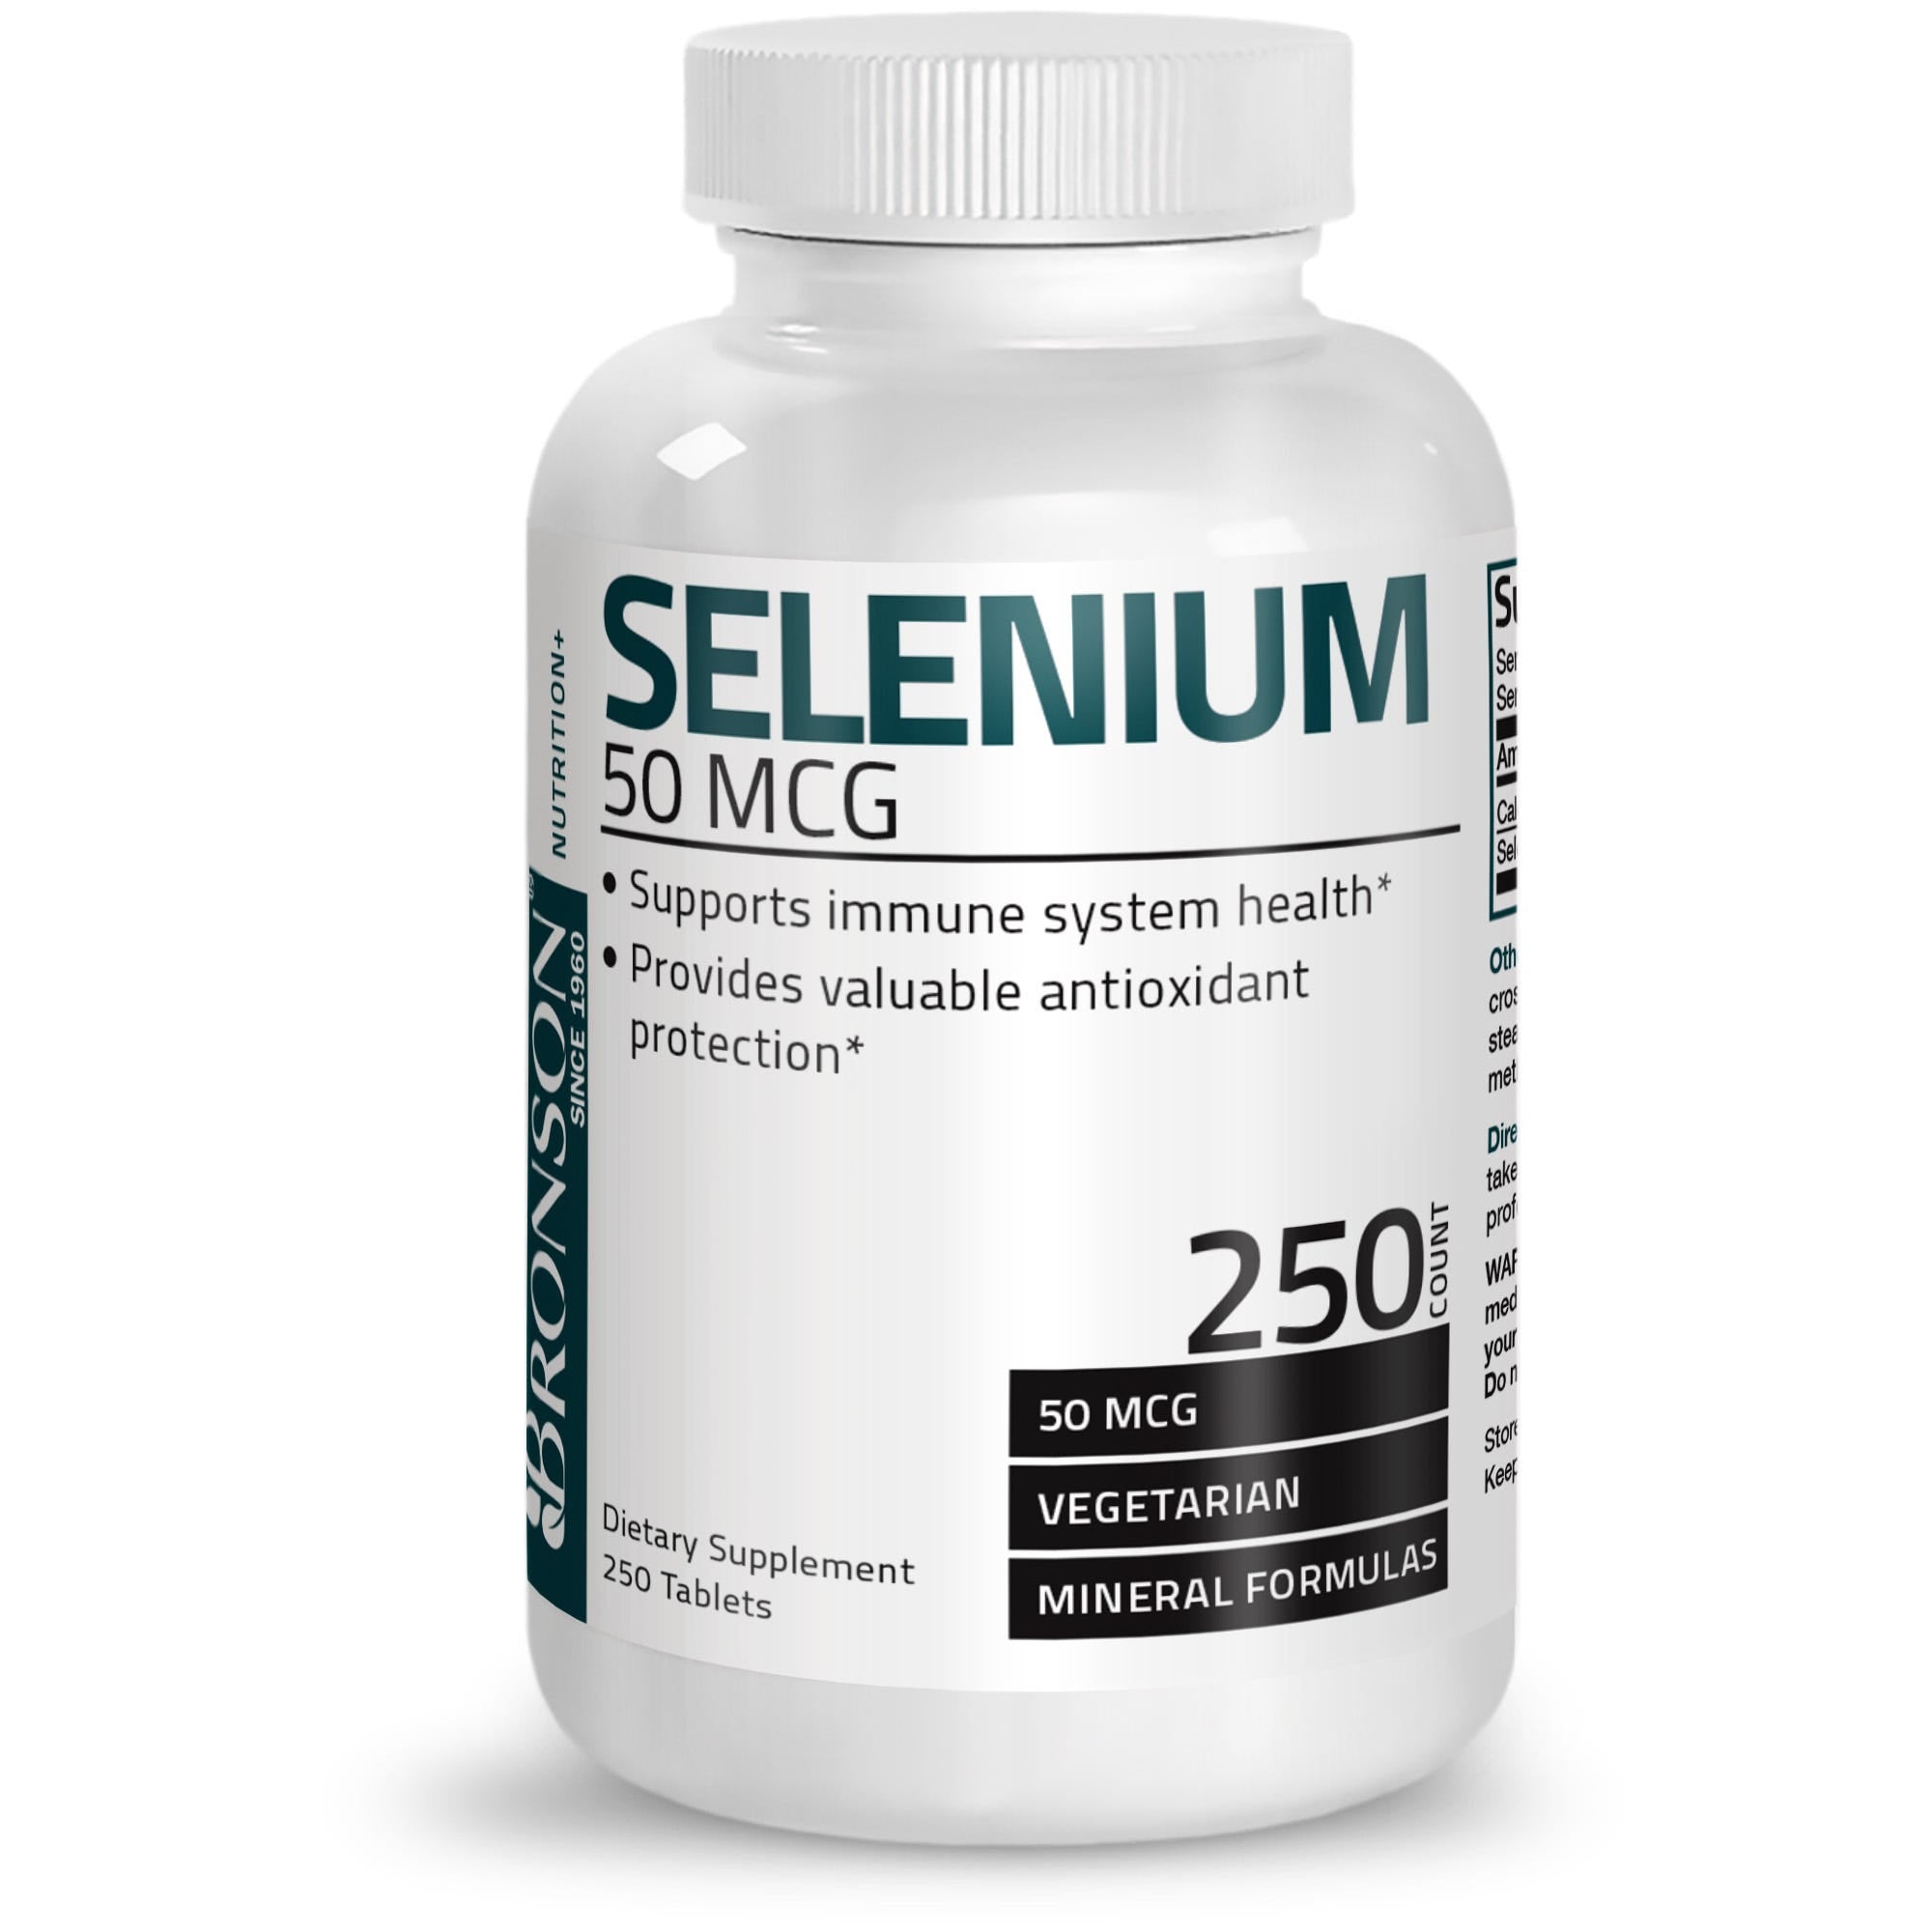 Selenium - 50 mcg - 250 Tablets view 1 of 4